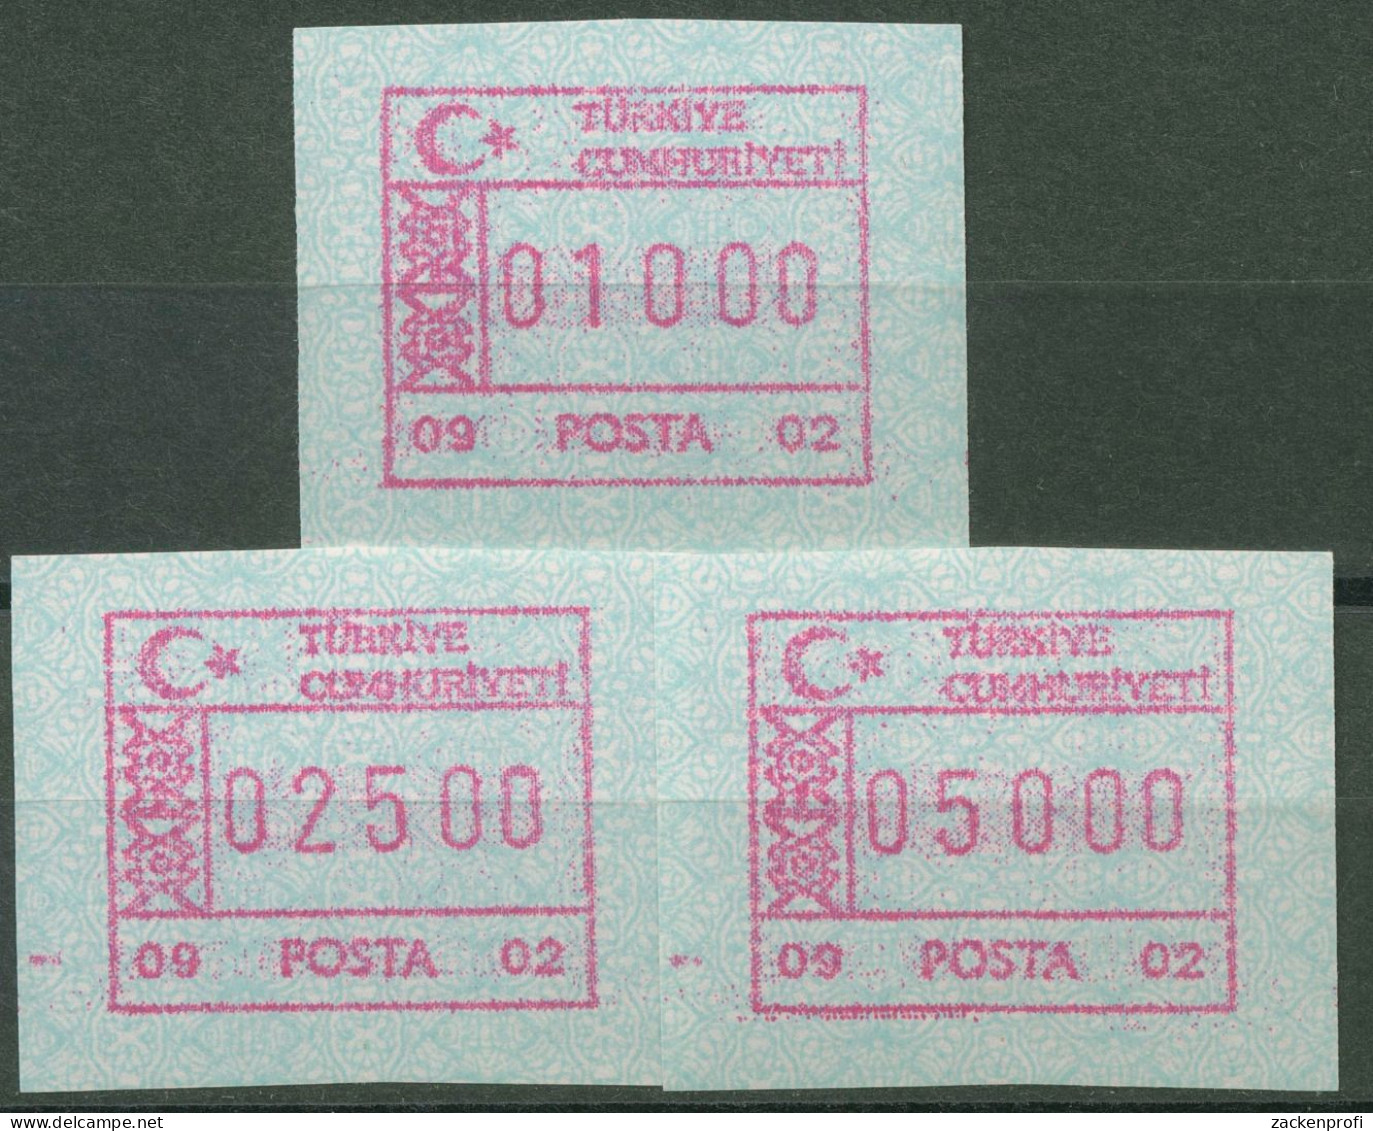 Türkei ATM 1992 Ornamente Automat 09 02, Satz 3 Werte ATM 2.6 S Postfrisch - Distributors